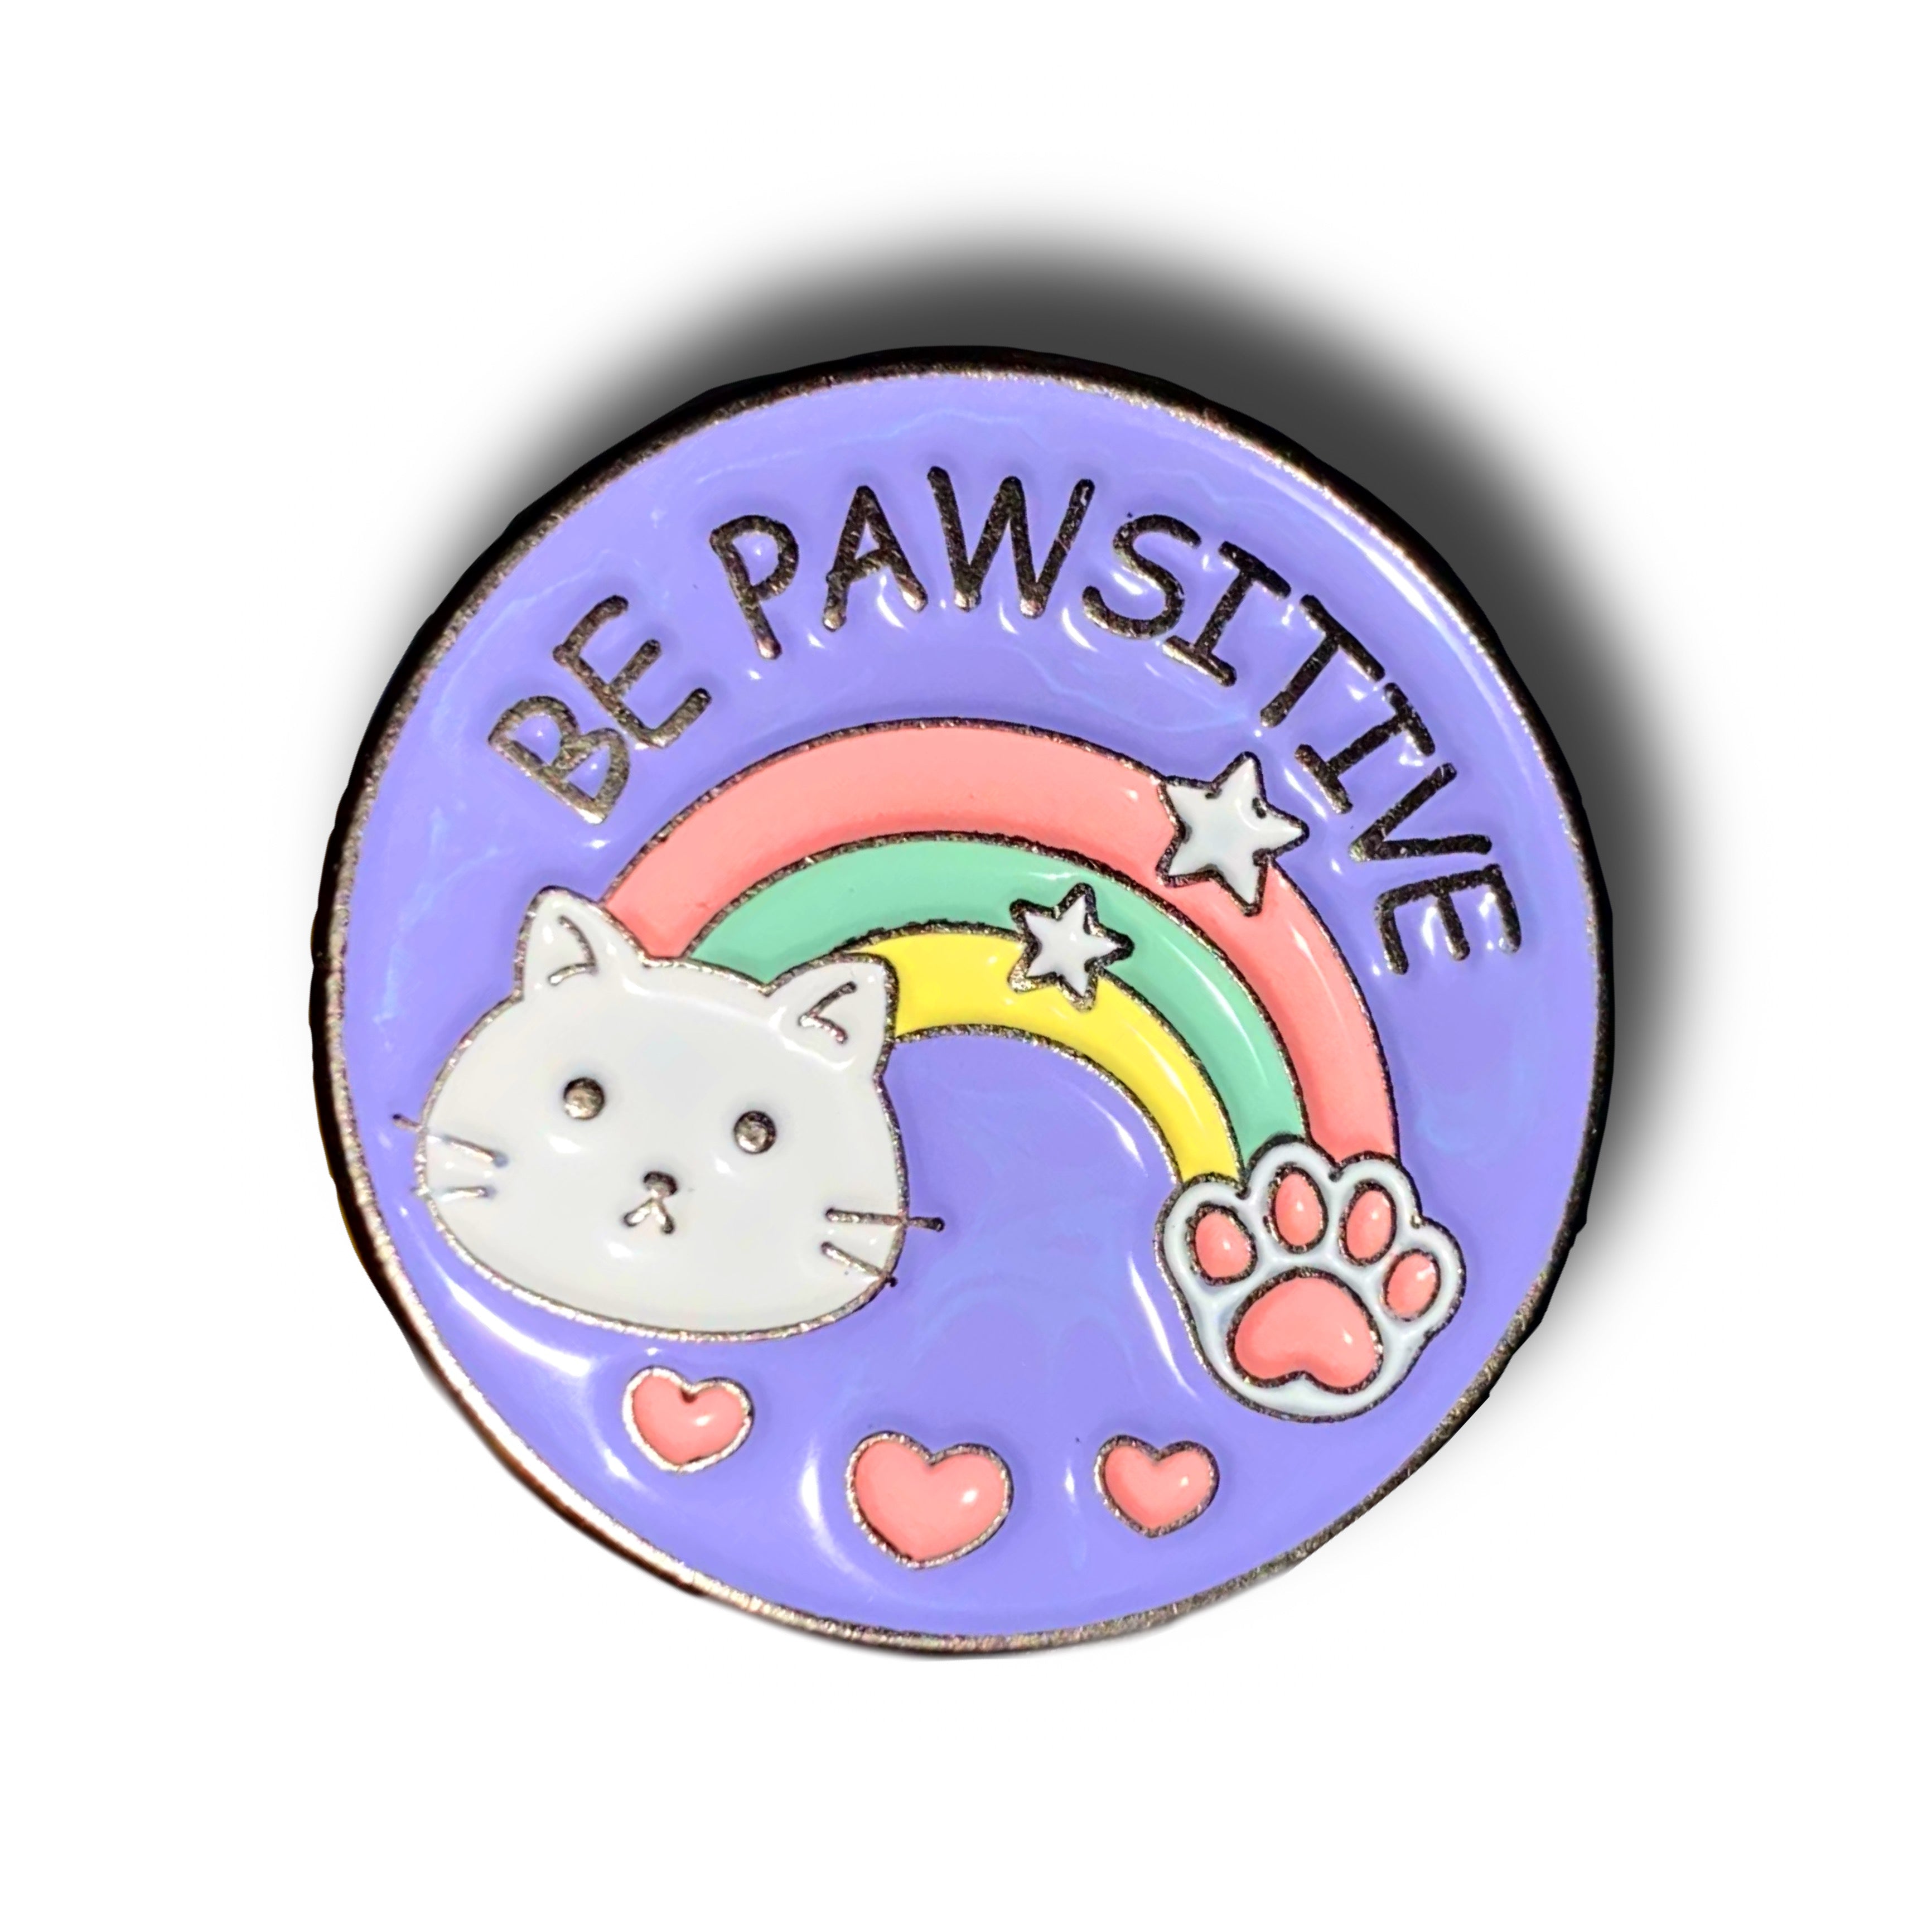 Be Pawsitive Rainbow Enamel Pin Badge